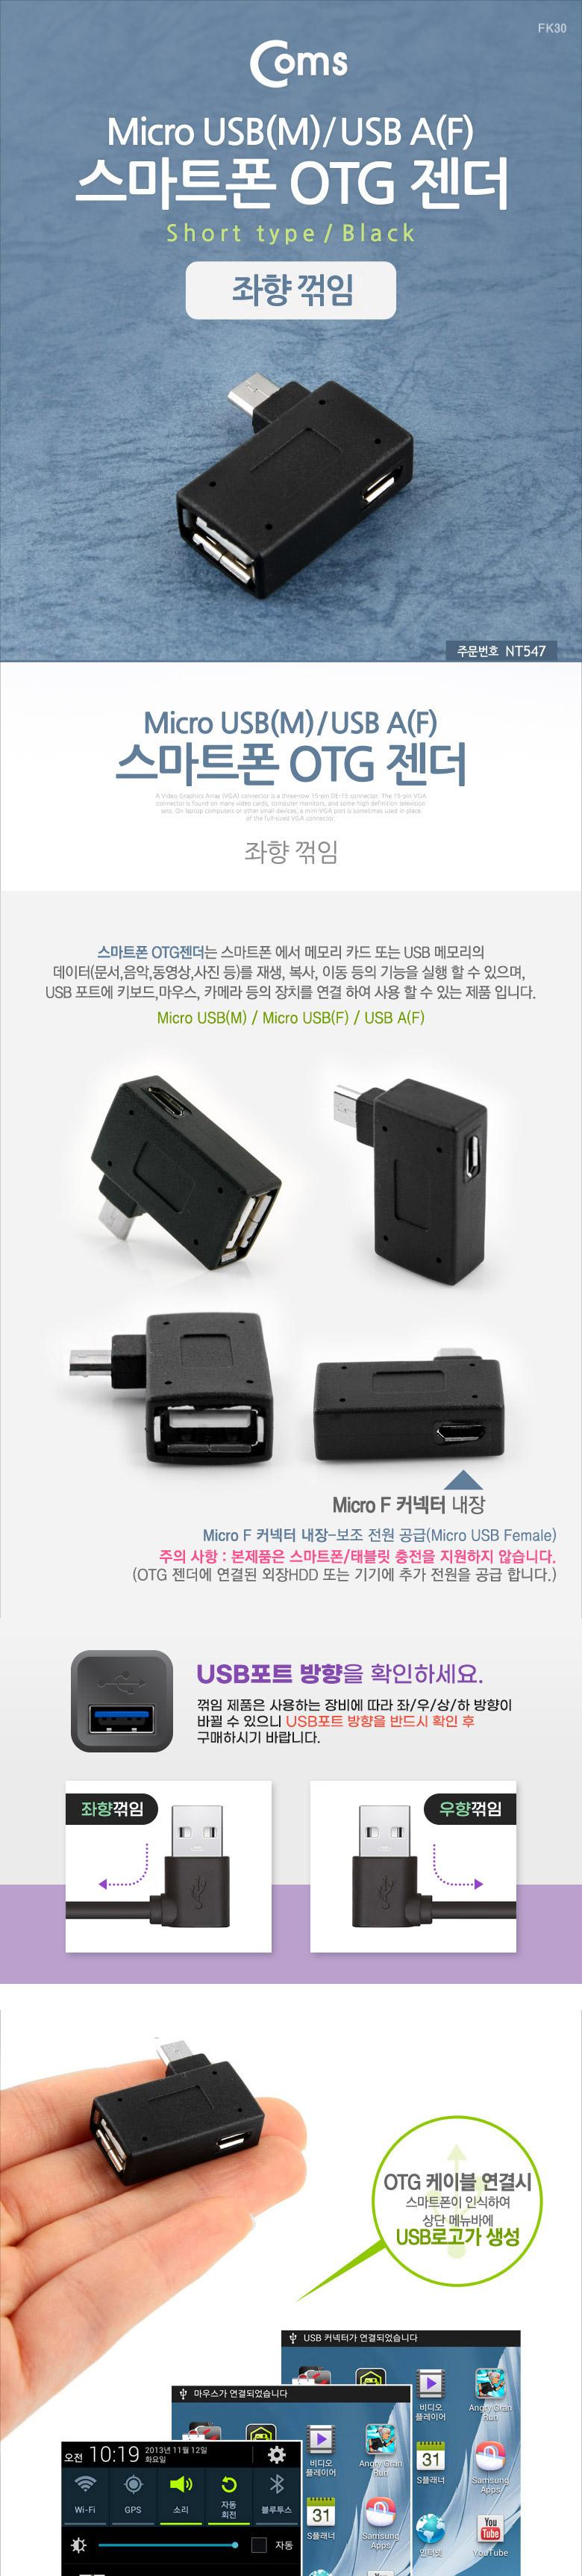 Coms 스마트폰 OTG 젠더-Micro M USB F (보조 전원공급 Micro F). 좌향 꺾임(꺽임) 폰용품 스마트폰용품 휴대폰용품 젠더 휴대폰젠더